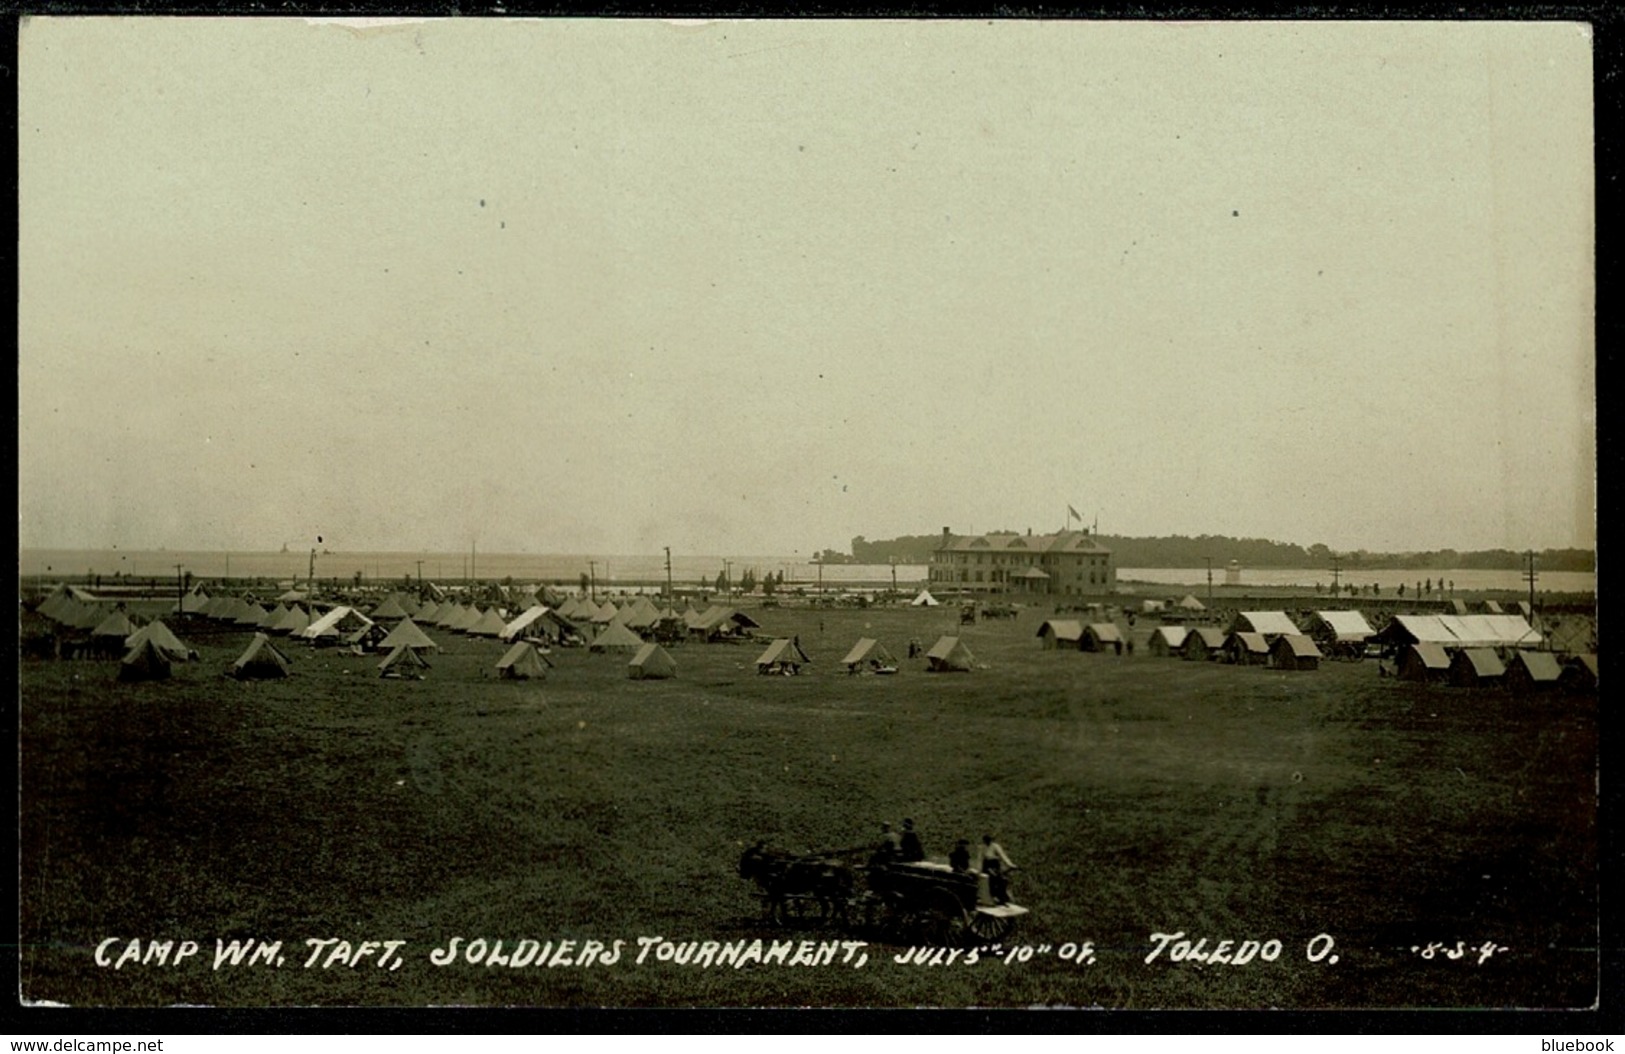 Ref 1273 - 1909 Real Photo Postcard - Military Tournament Camp Wm Taft Toledo Ohio USA (2) - Toledo